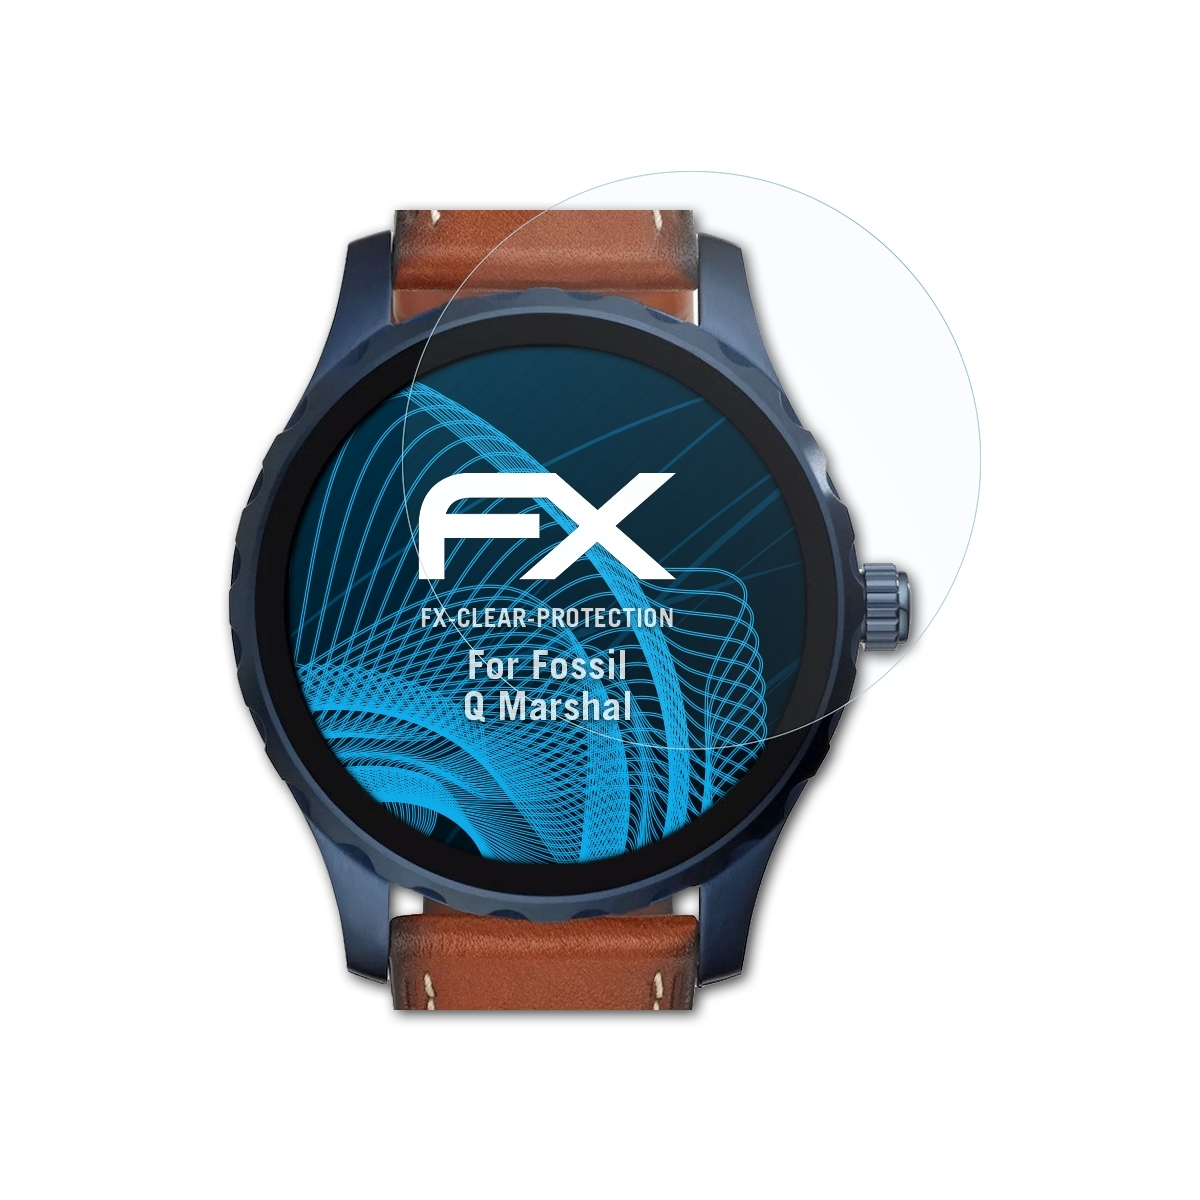 ATFOLIX 3x FX-Clear Fossil Q Marshal) Displayschutz(für